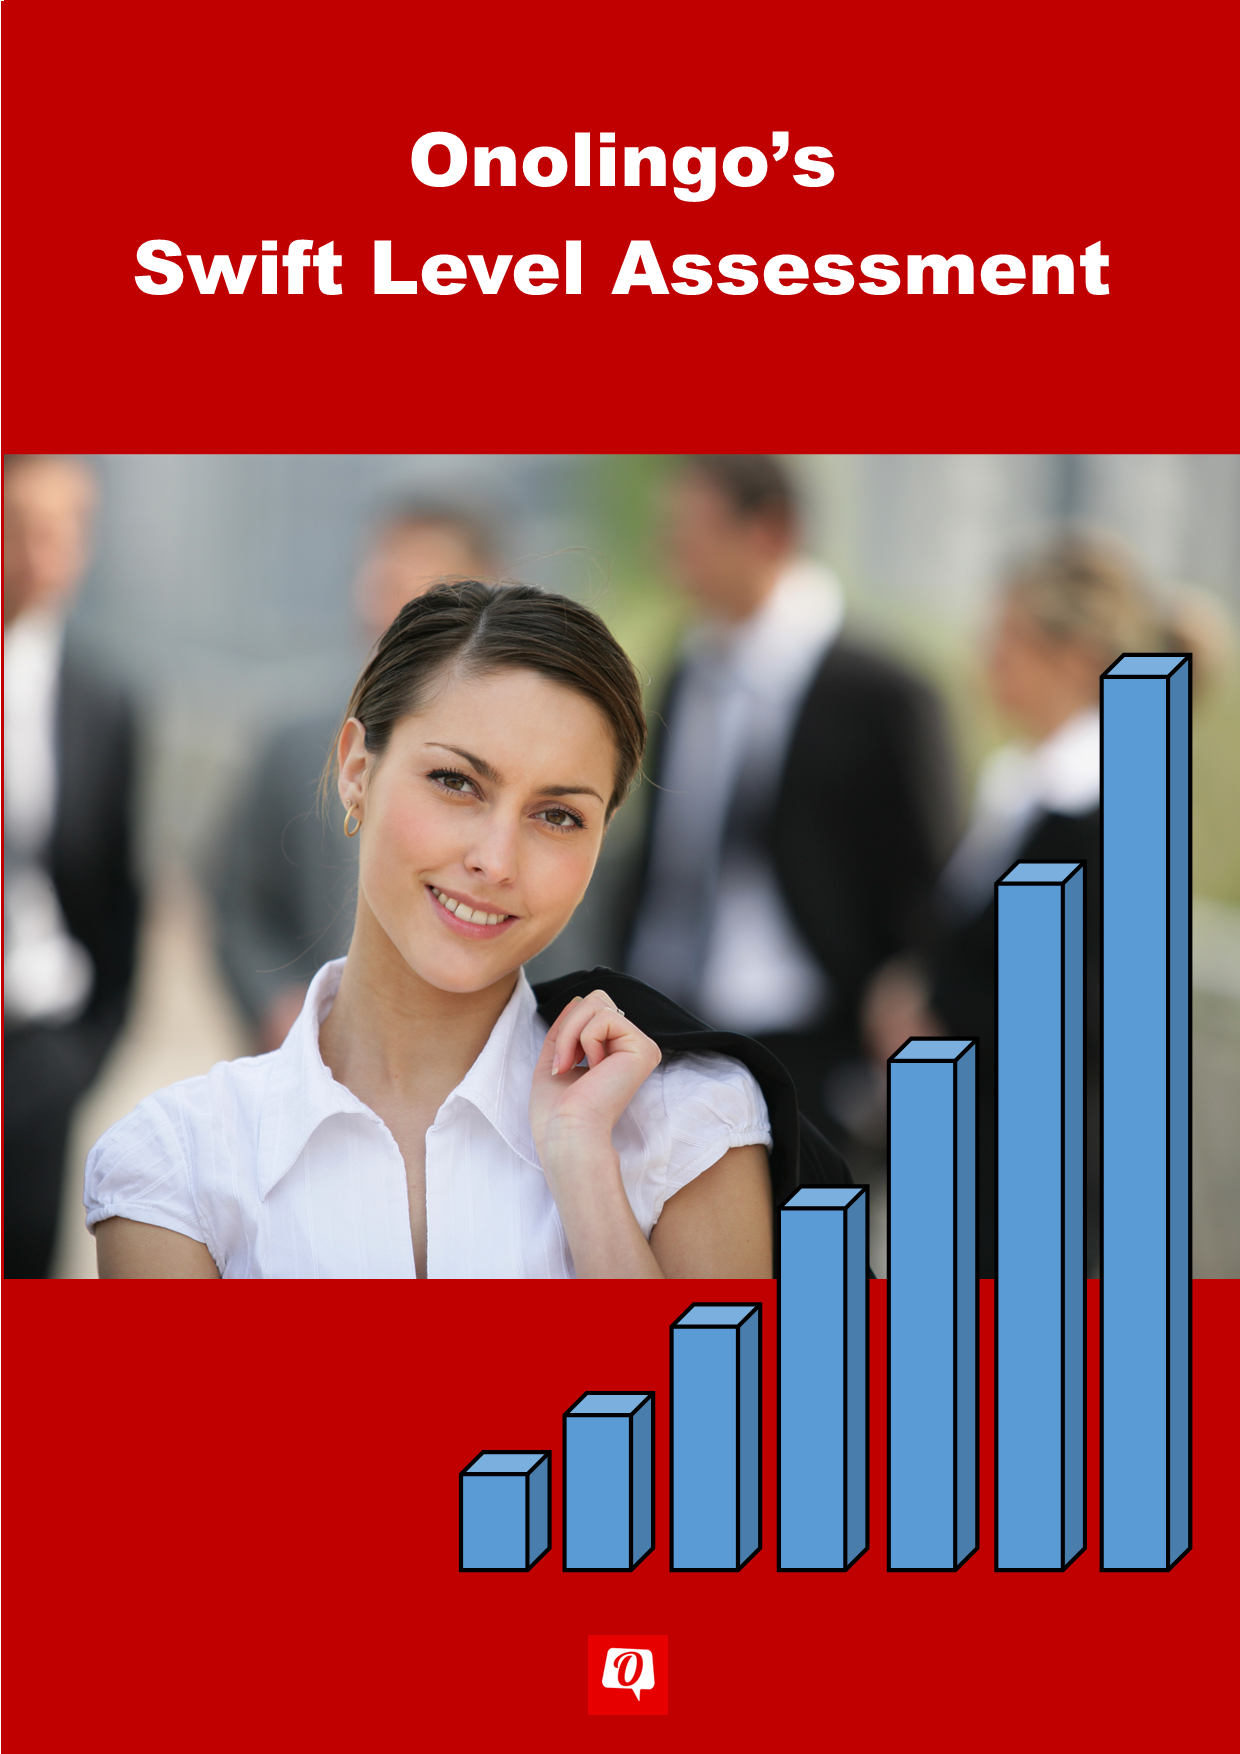 Onolingo's Swift Level Assessment